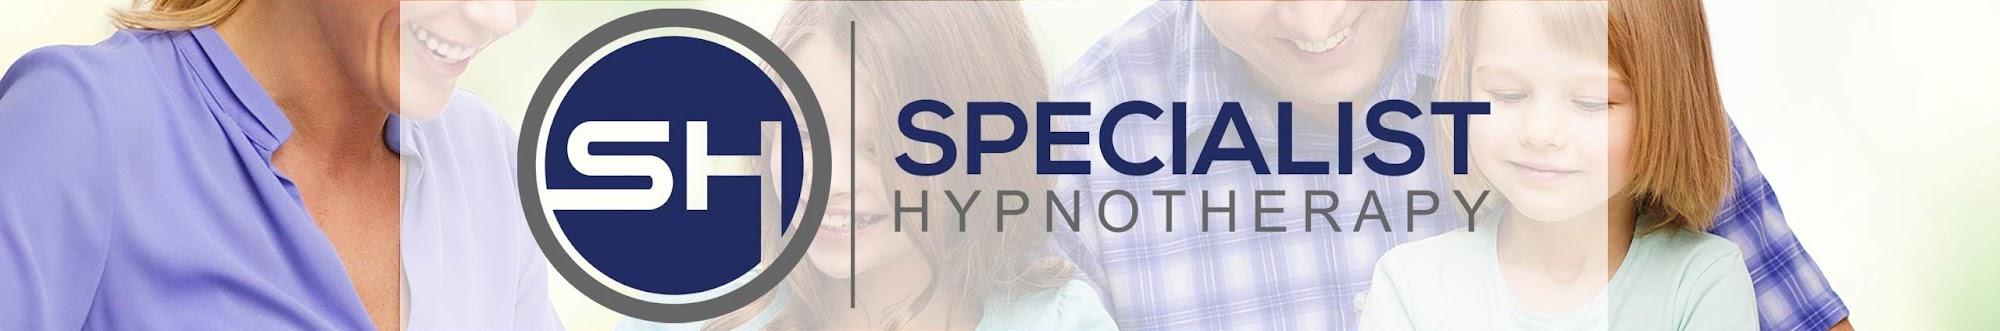 Specialist Hypnotherapy